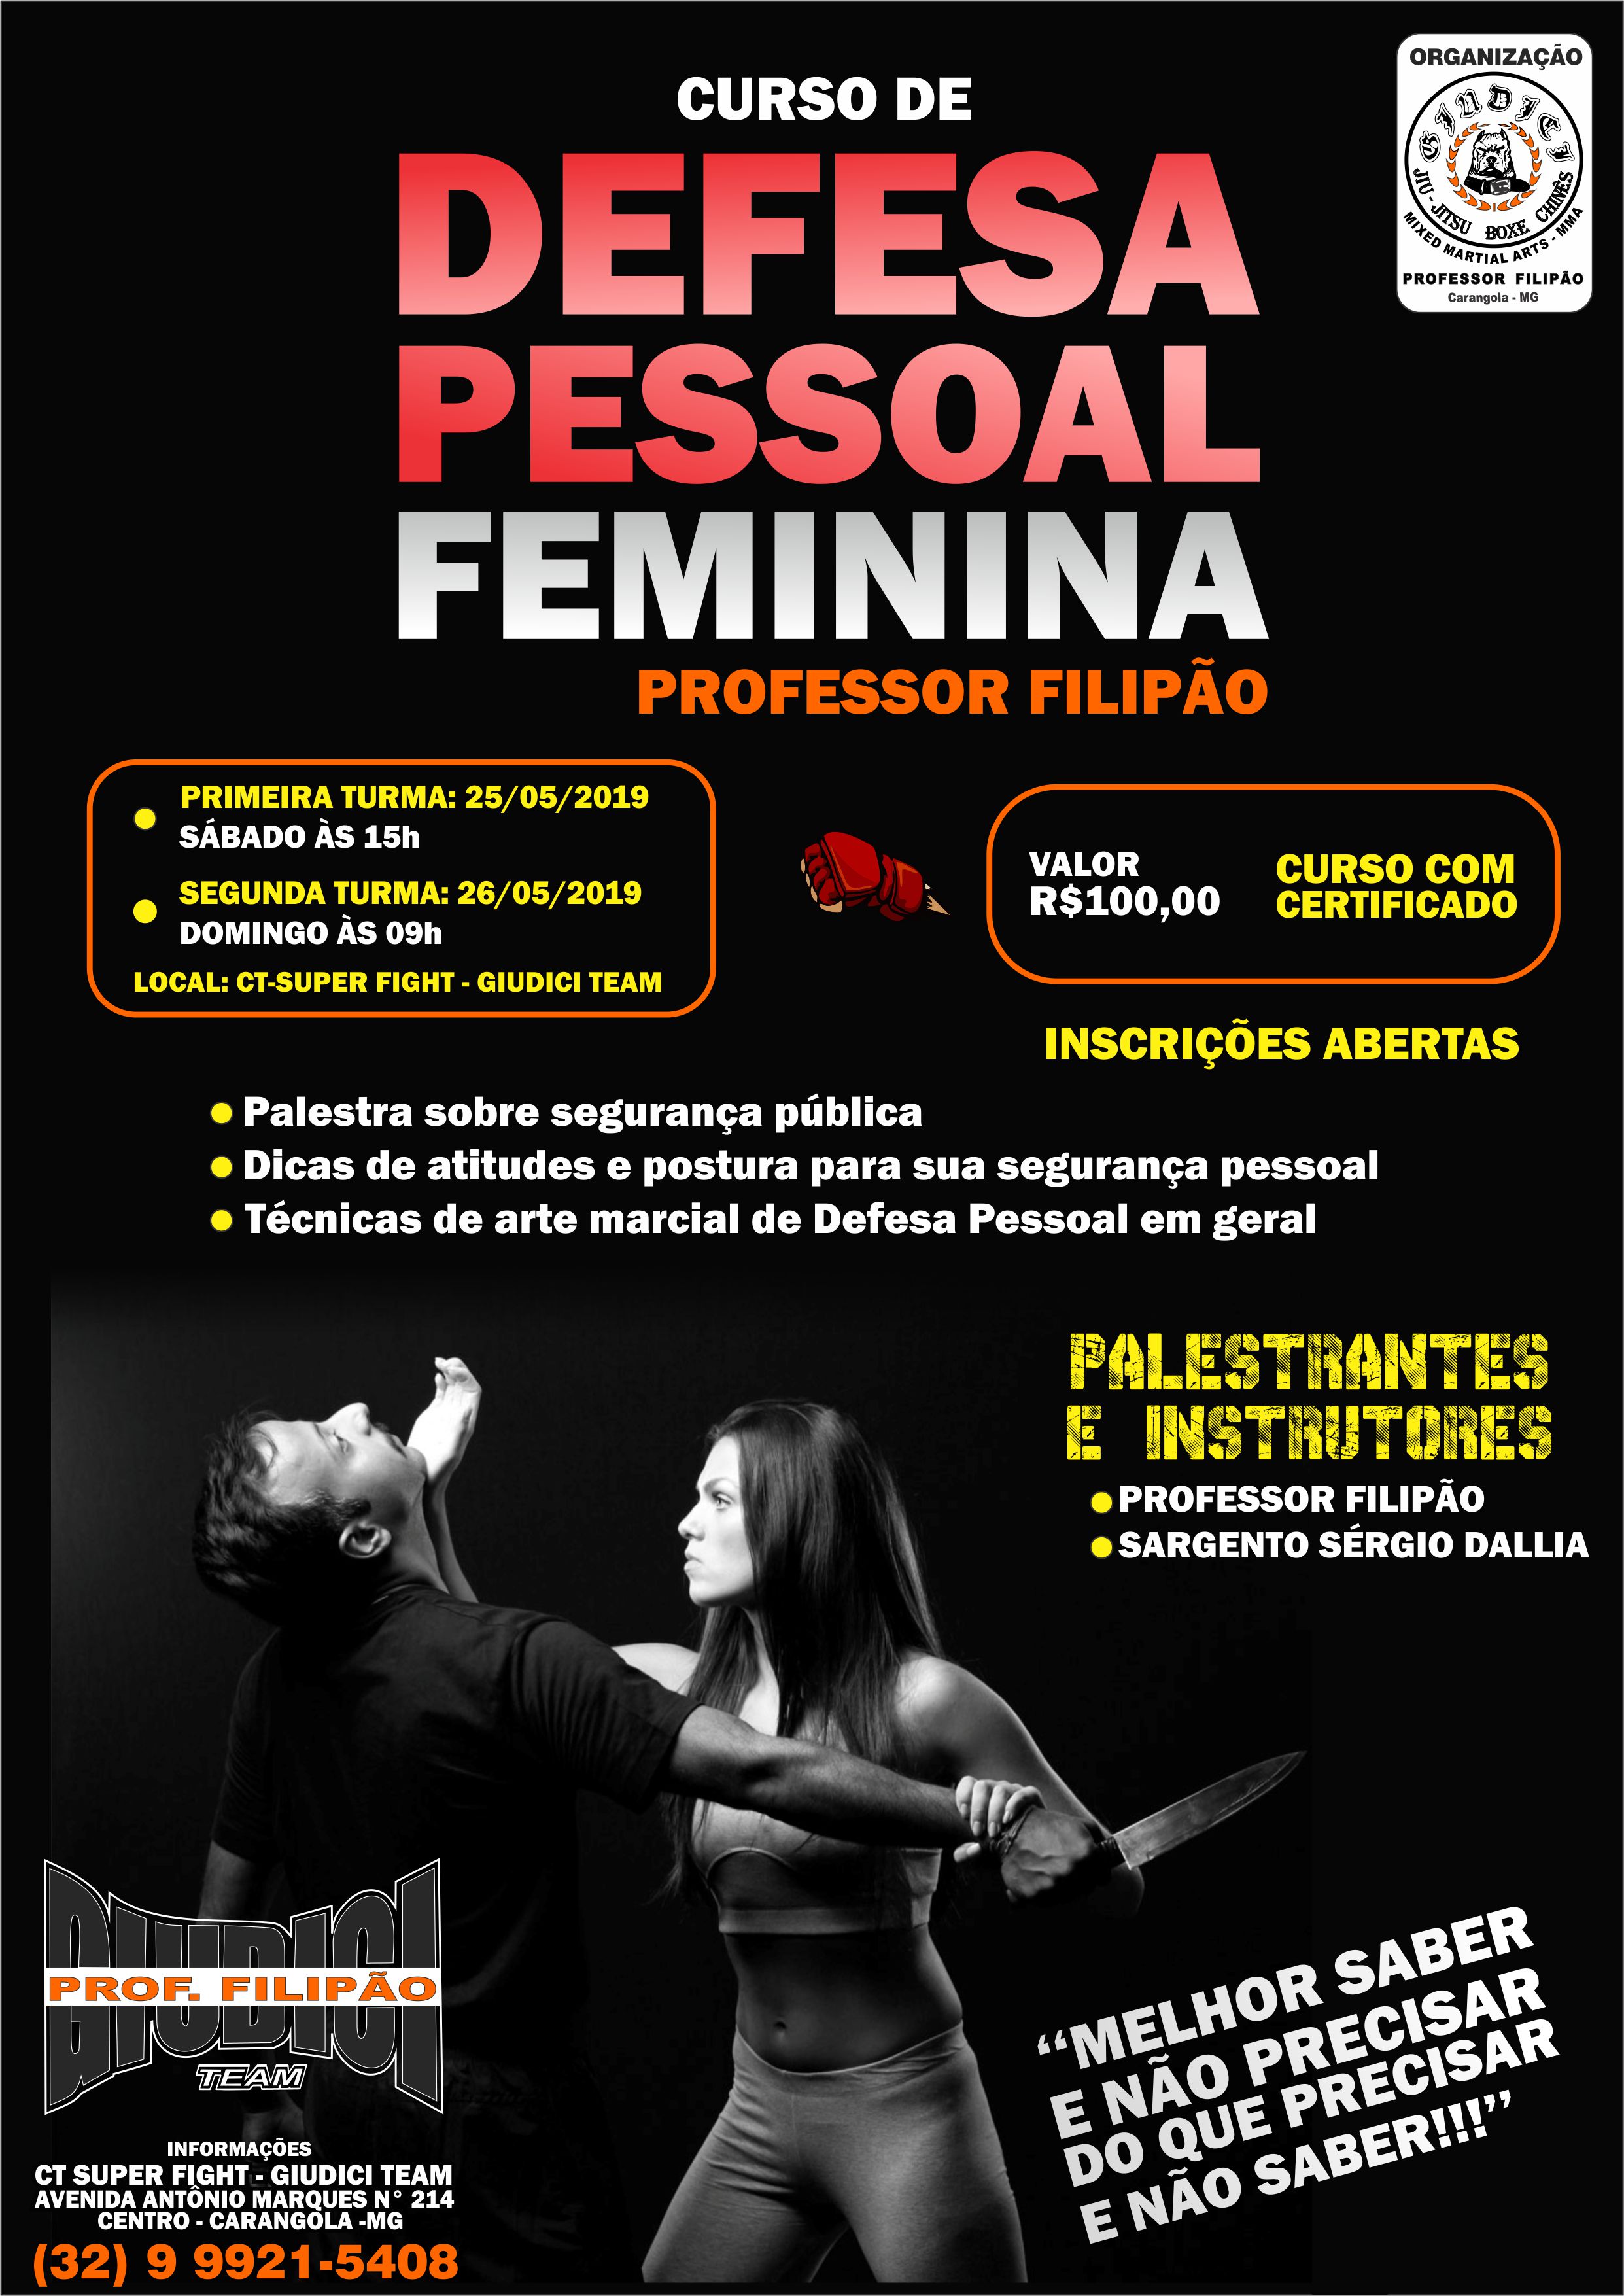 Curso de Defesa Pessoal Feminina, Aula 3 